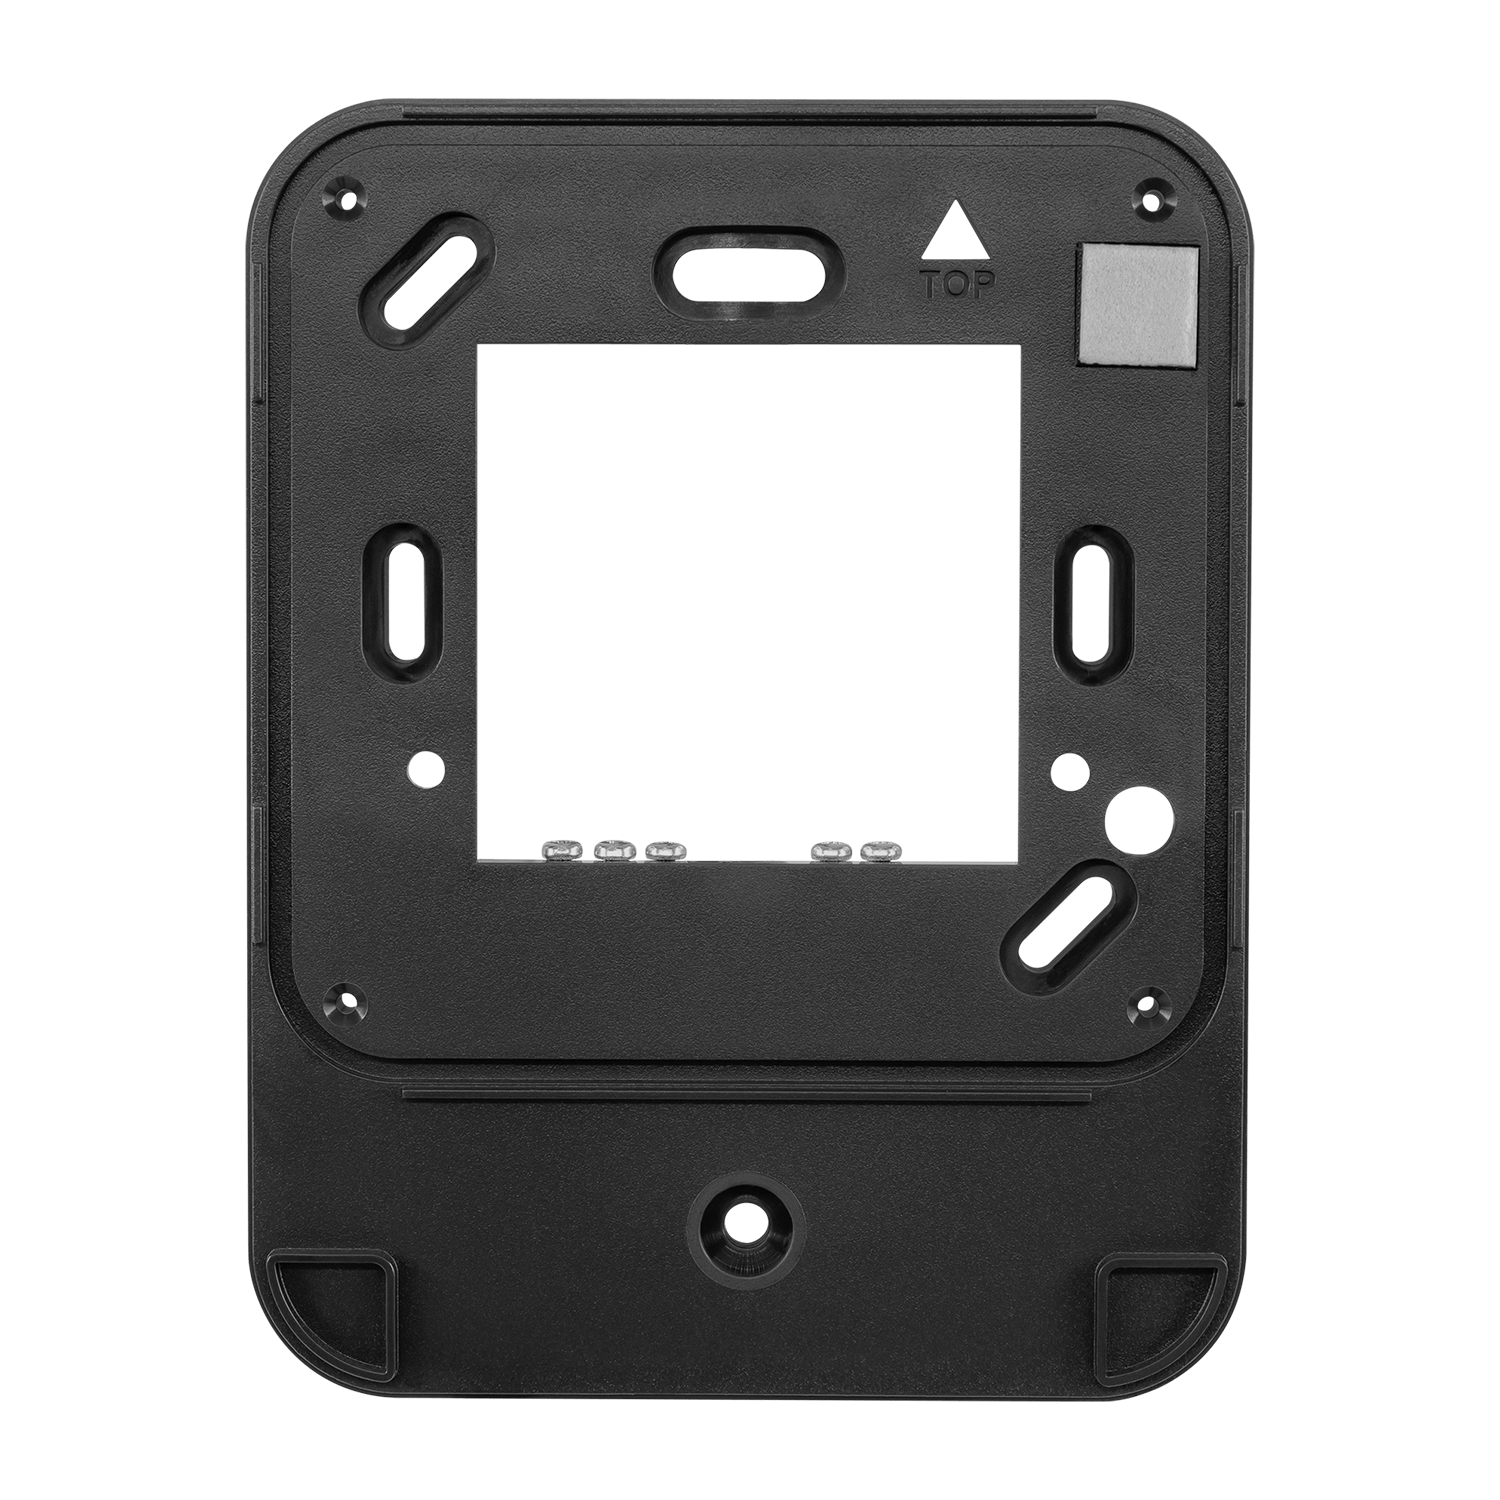 ATL 6 - 6 Spacer for access control reader, black